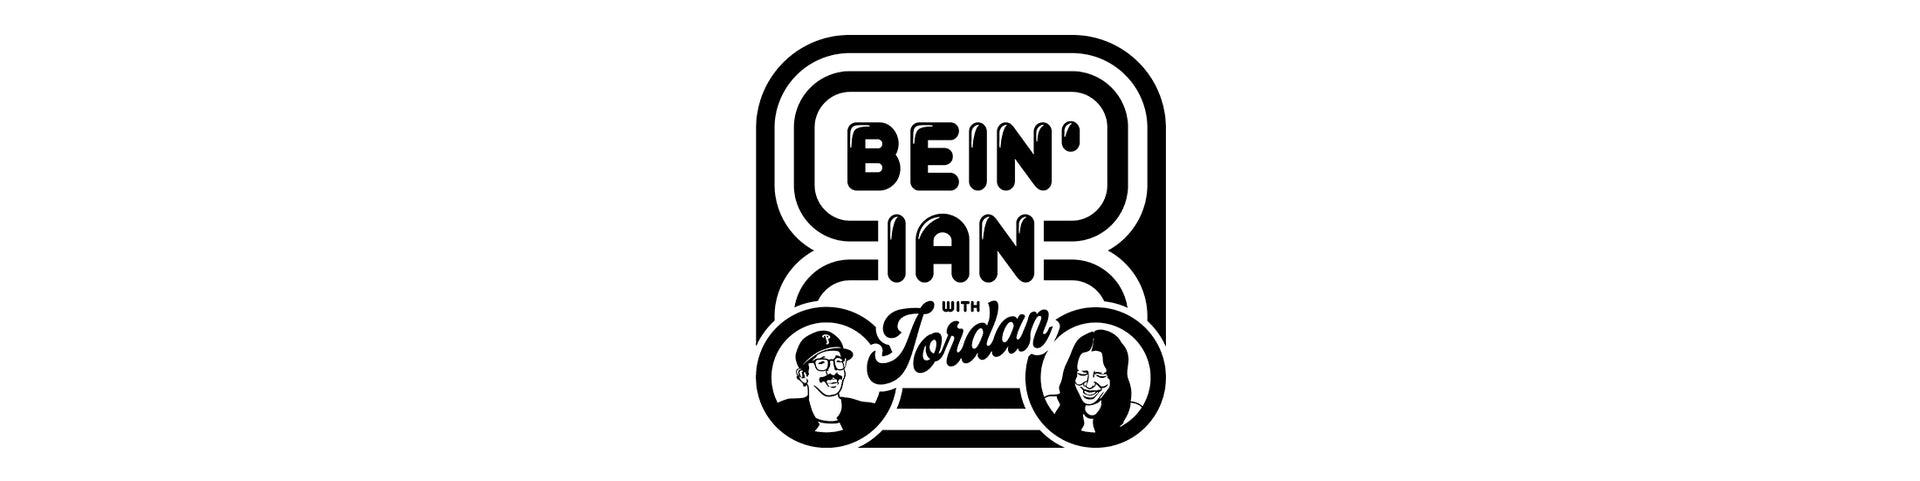 Bein' Ian with Jordan Podcast